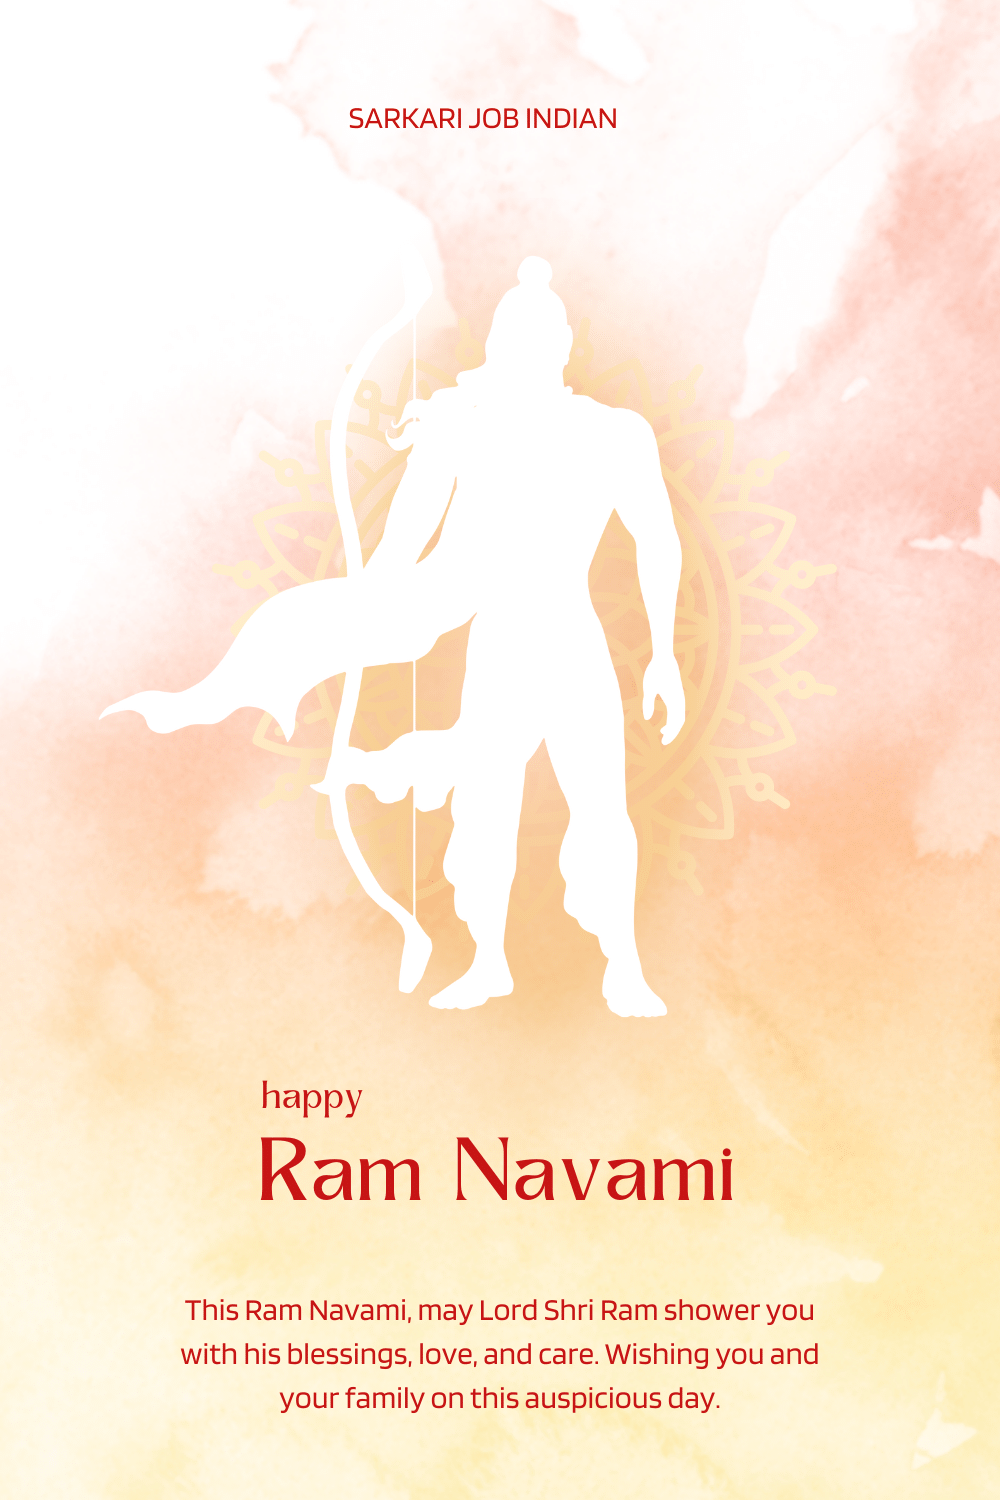 Ram Namvami